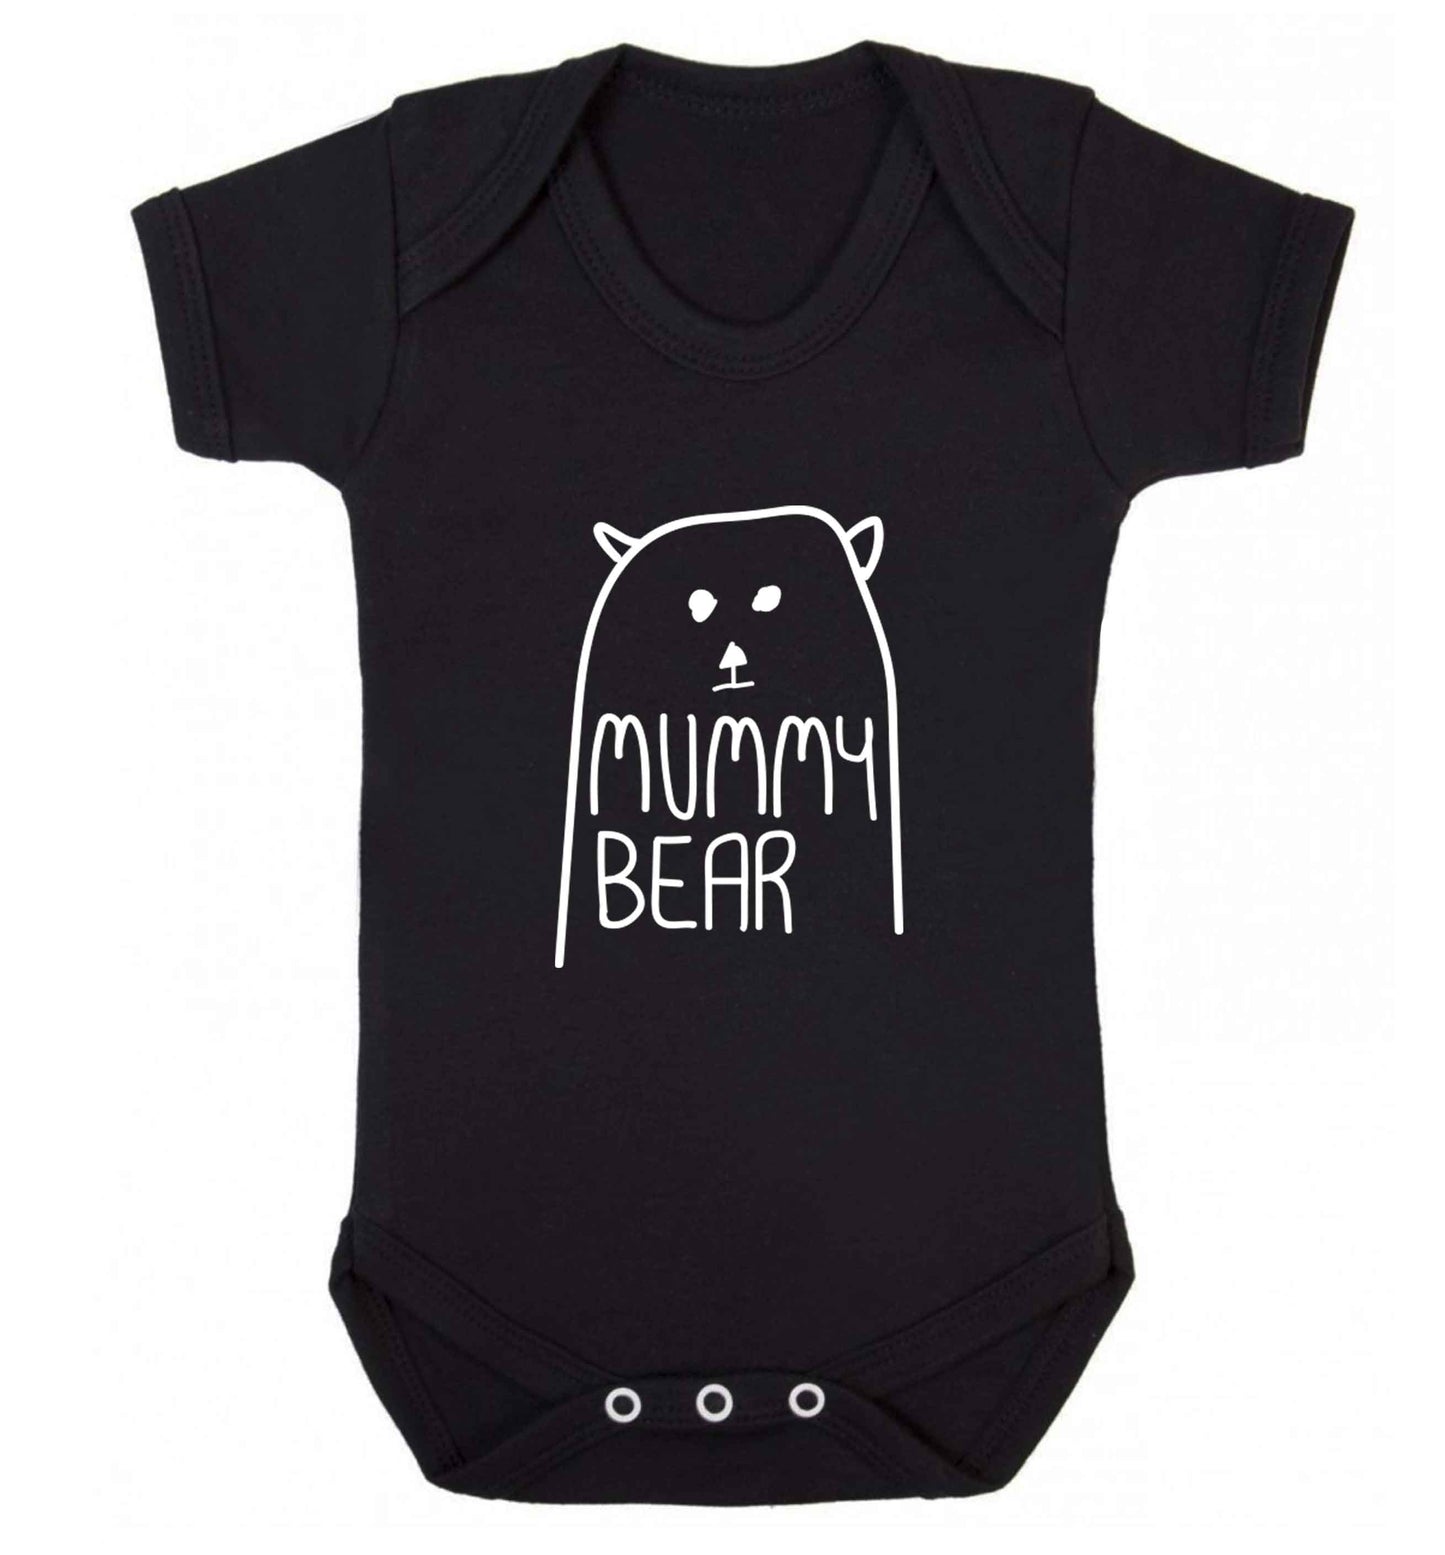 Mummy bear baby vest black 18-24 months